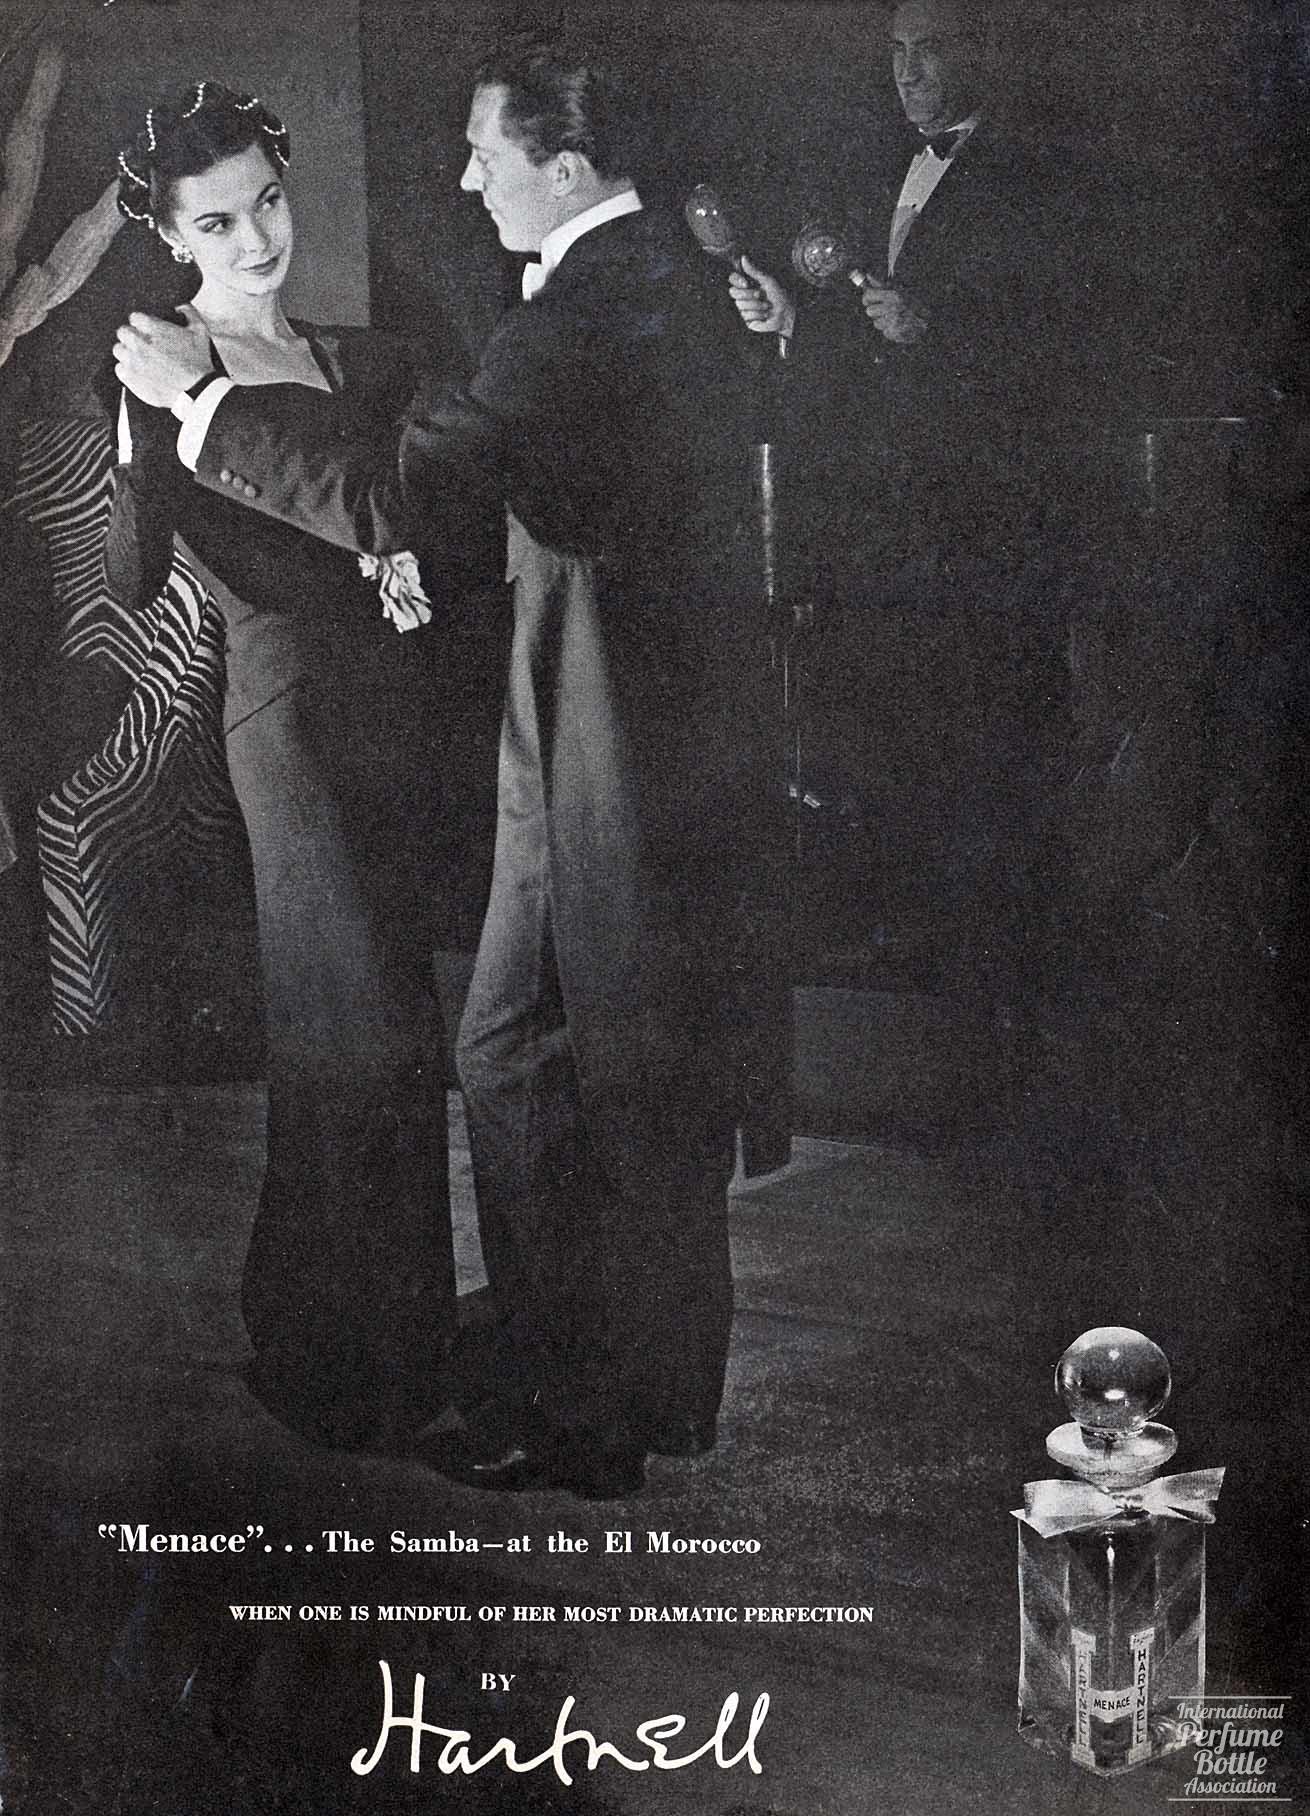 "Menace" by Hartnell Advertisement - 1944